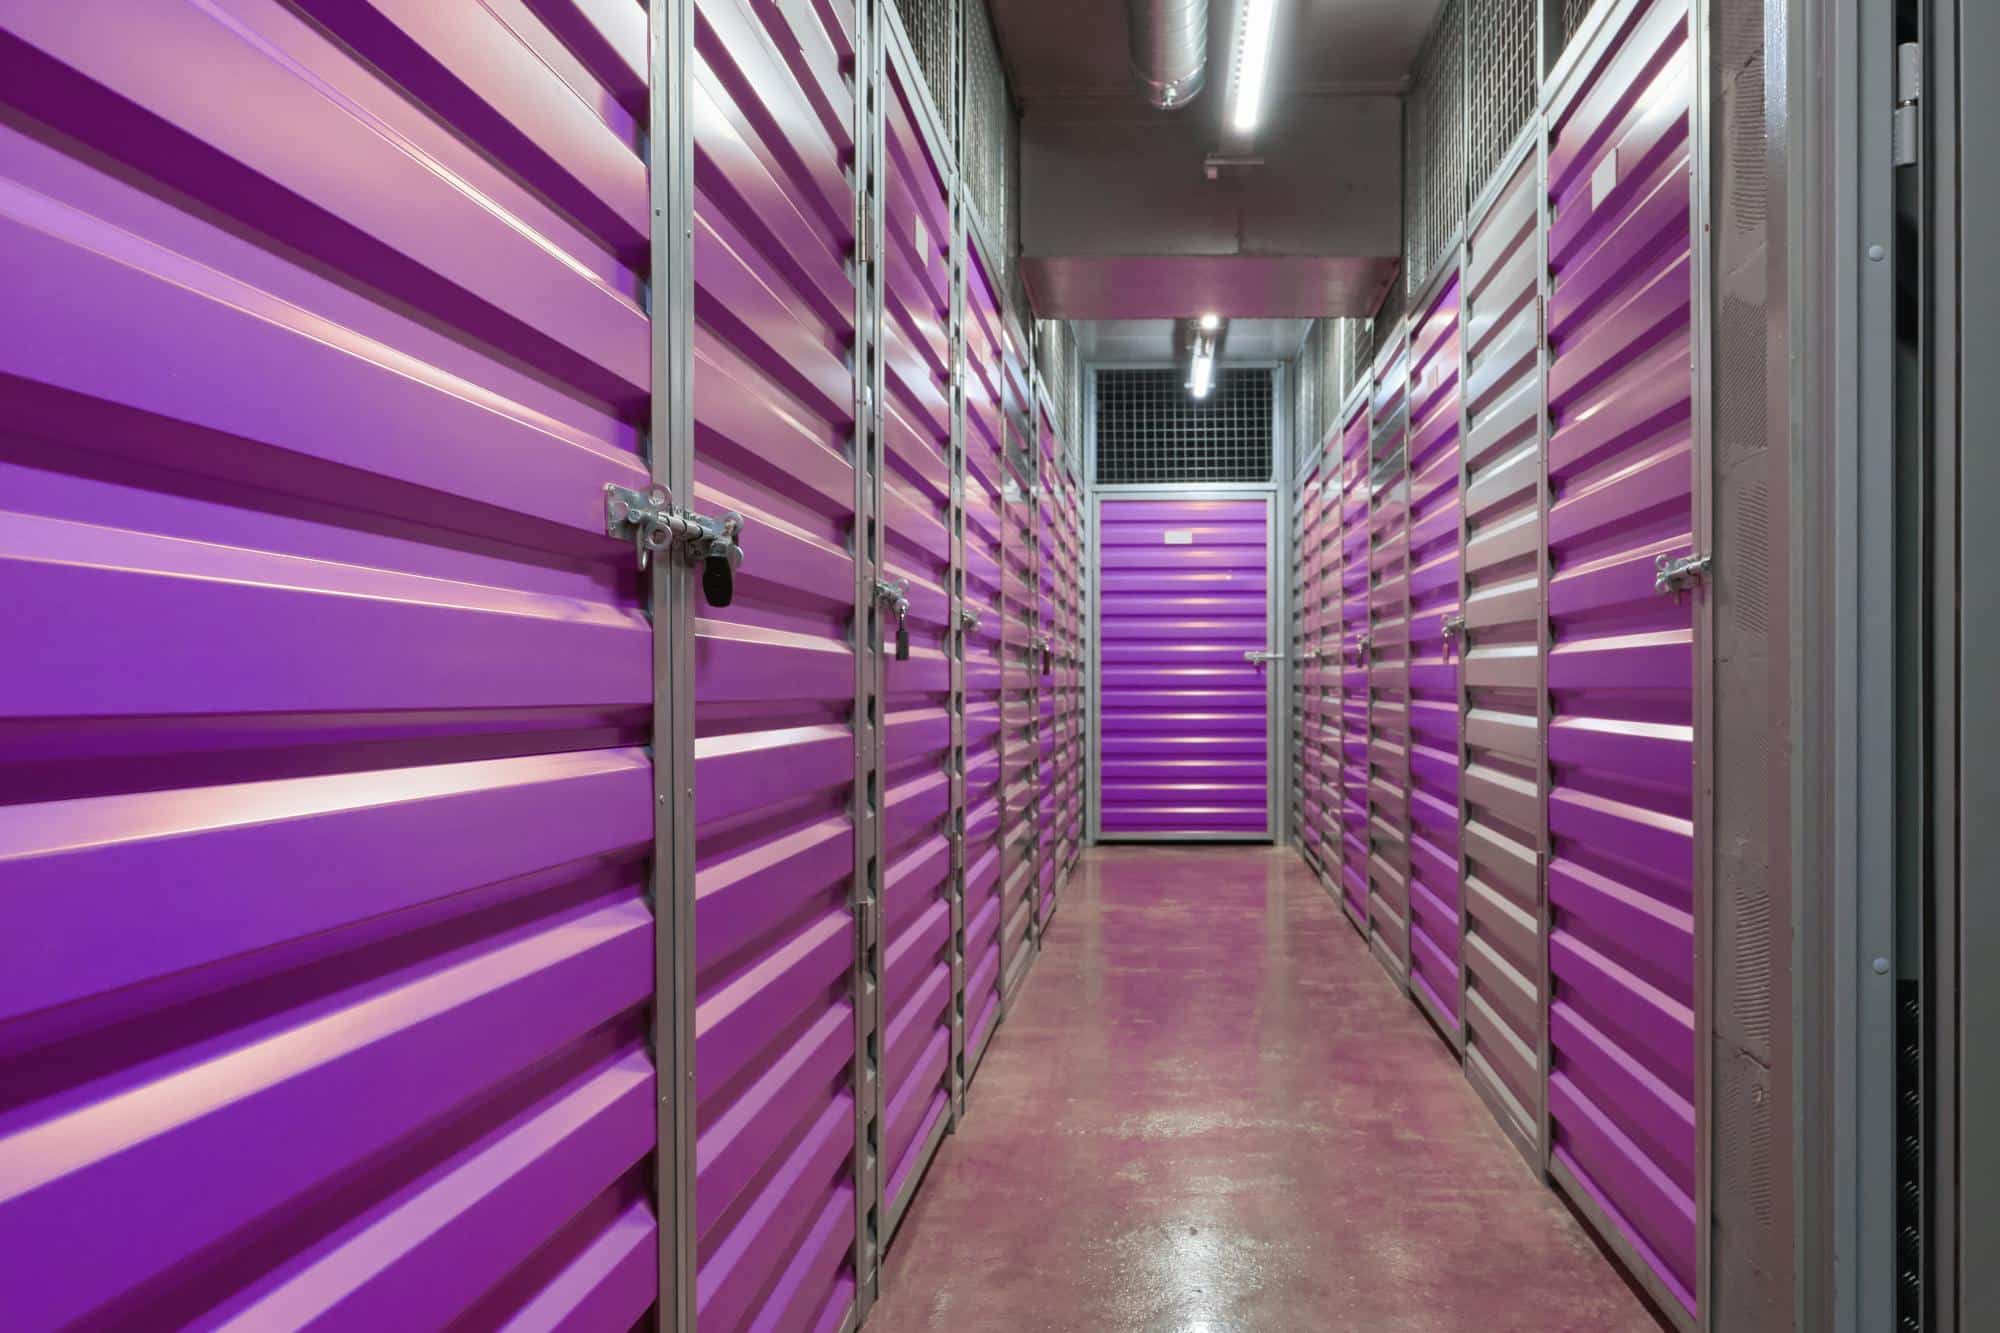 Storage containers in the Braithwaite's purple branding